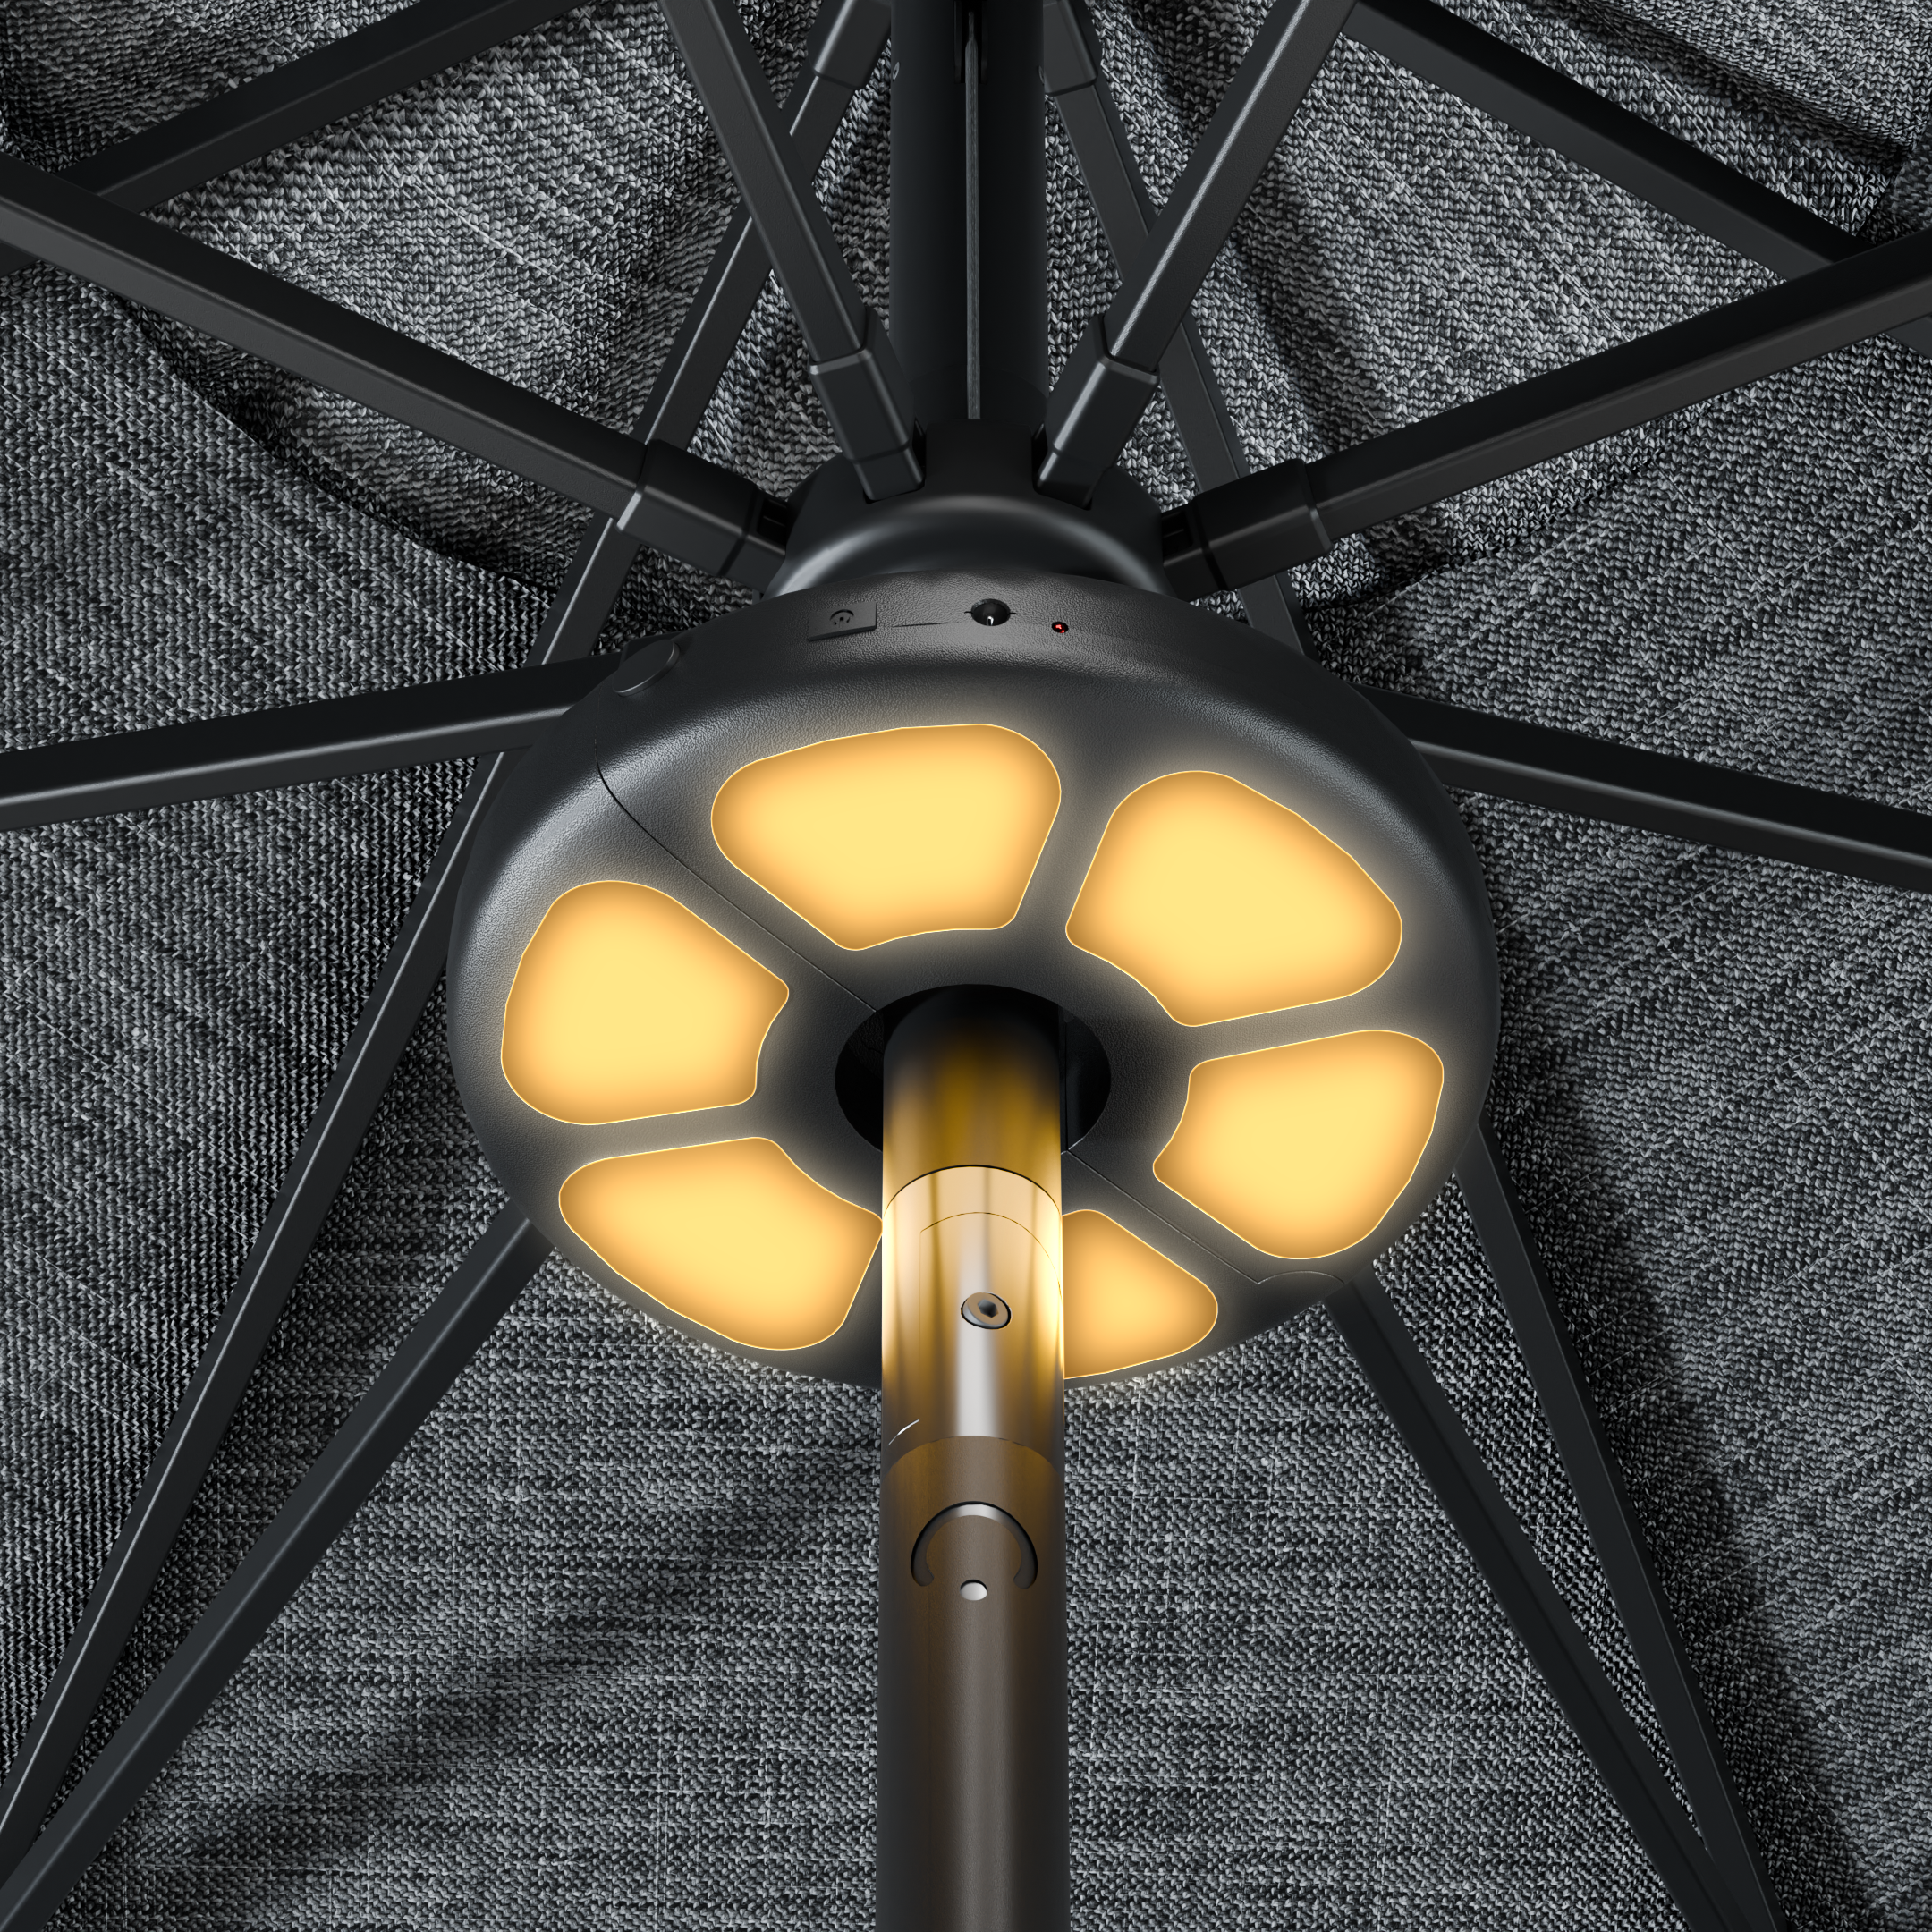 The LED Umbrella Light